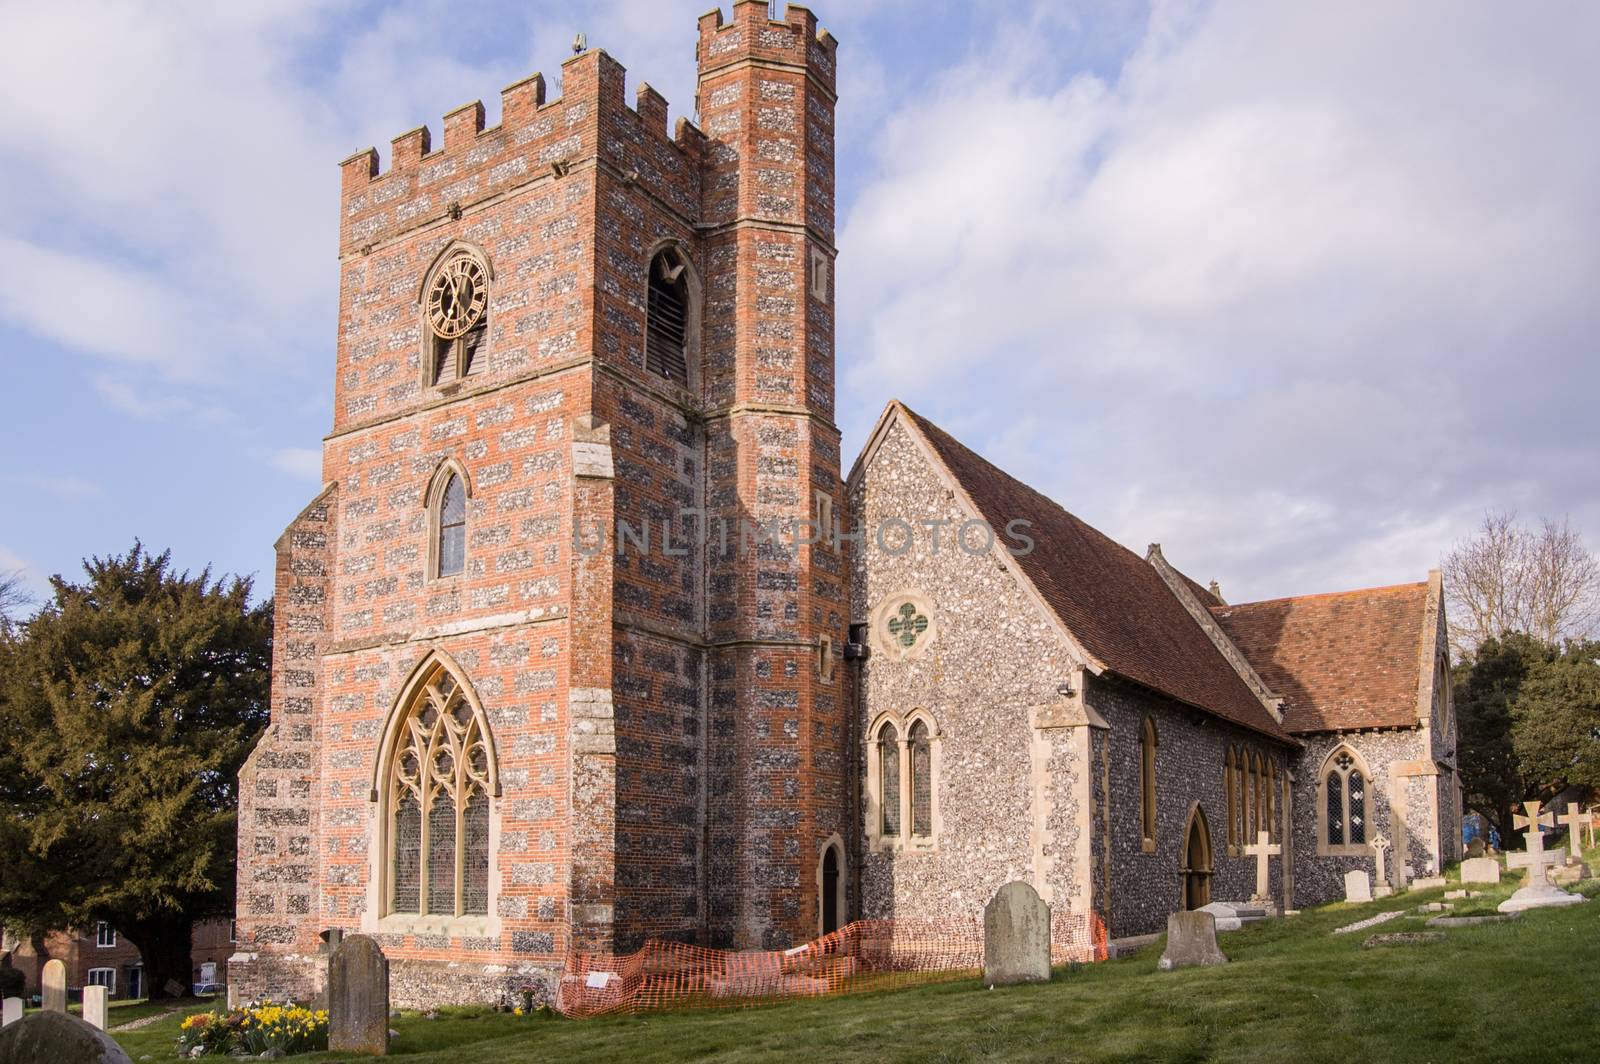 The parish church of St Andrew in the village of Bradfield, Berkshire.